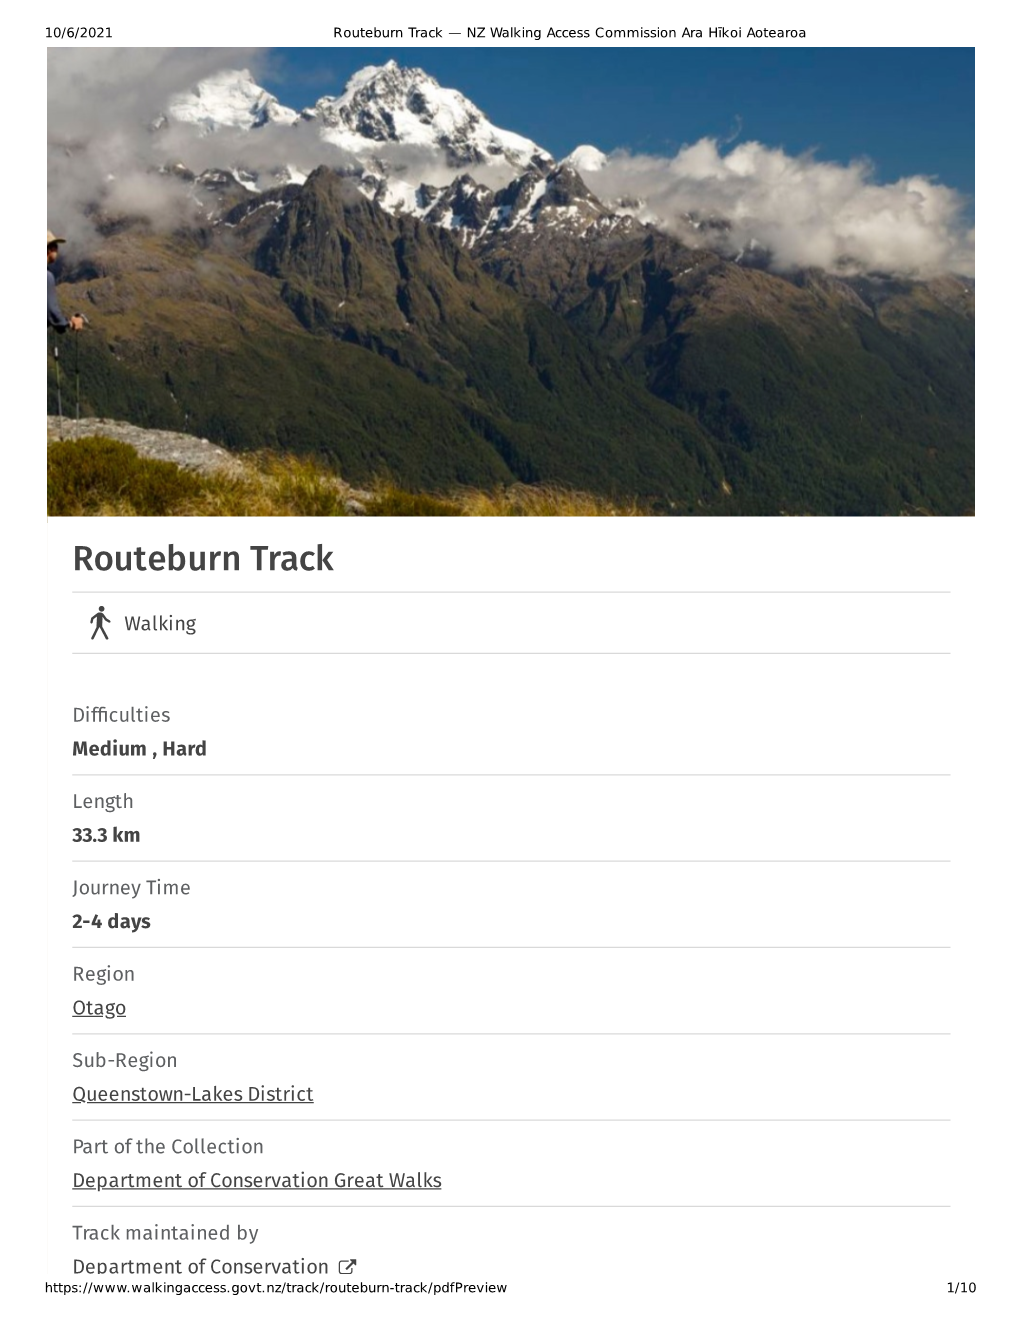 Routeburn Track — NZ Walking Access Commission Ara Hīkoi Aotearoa